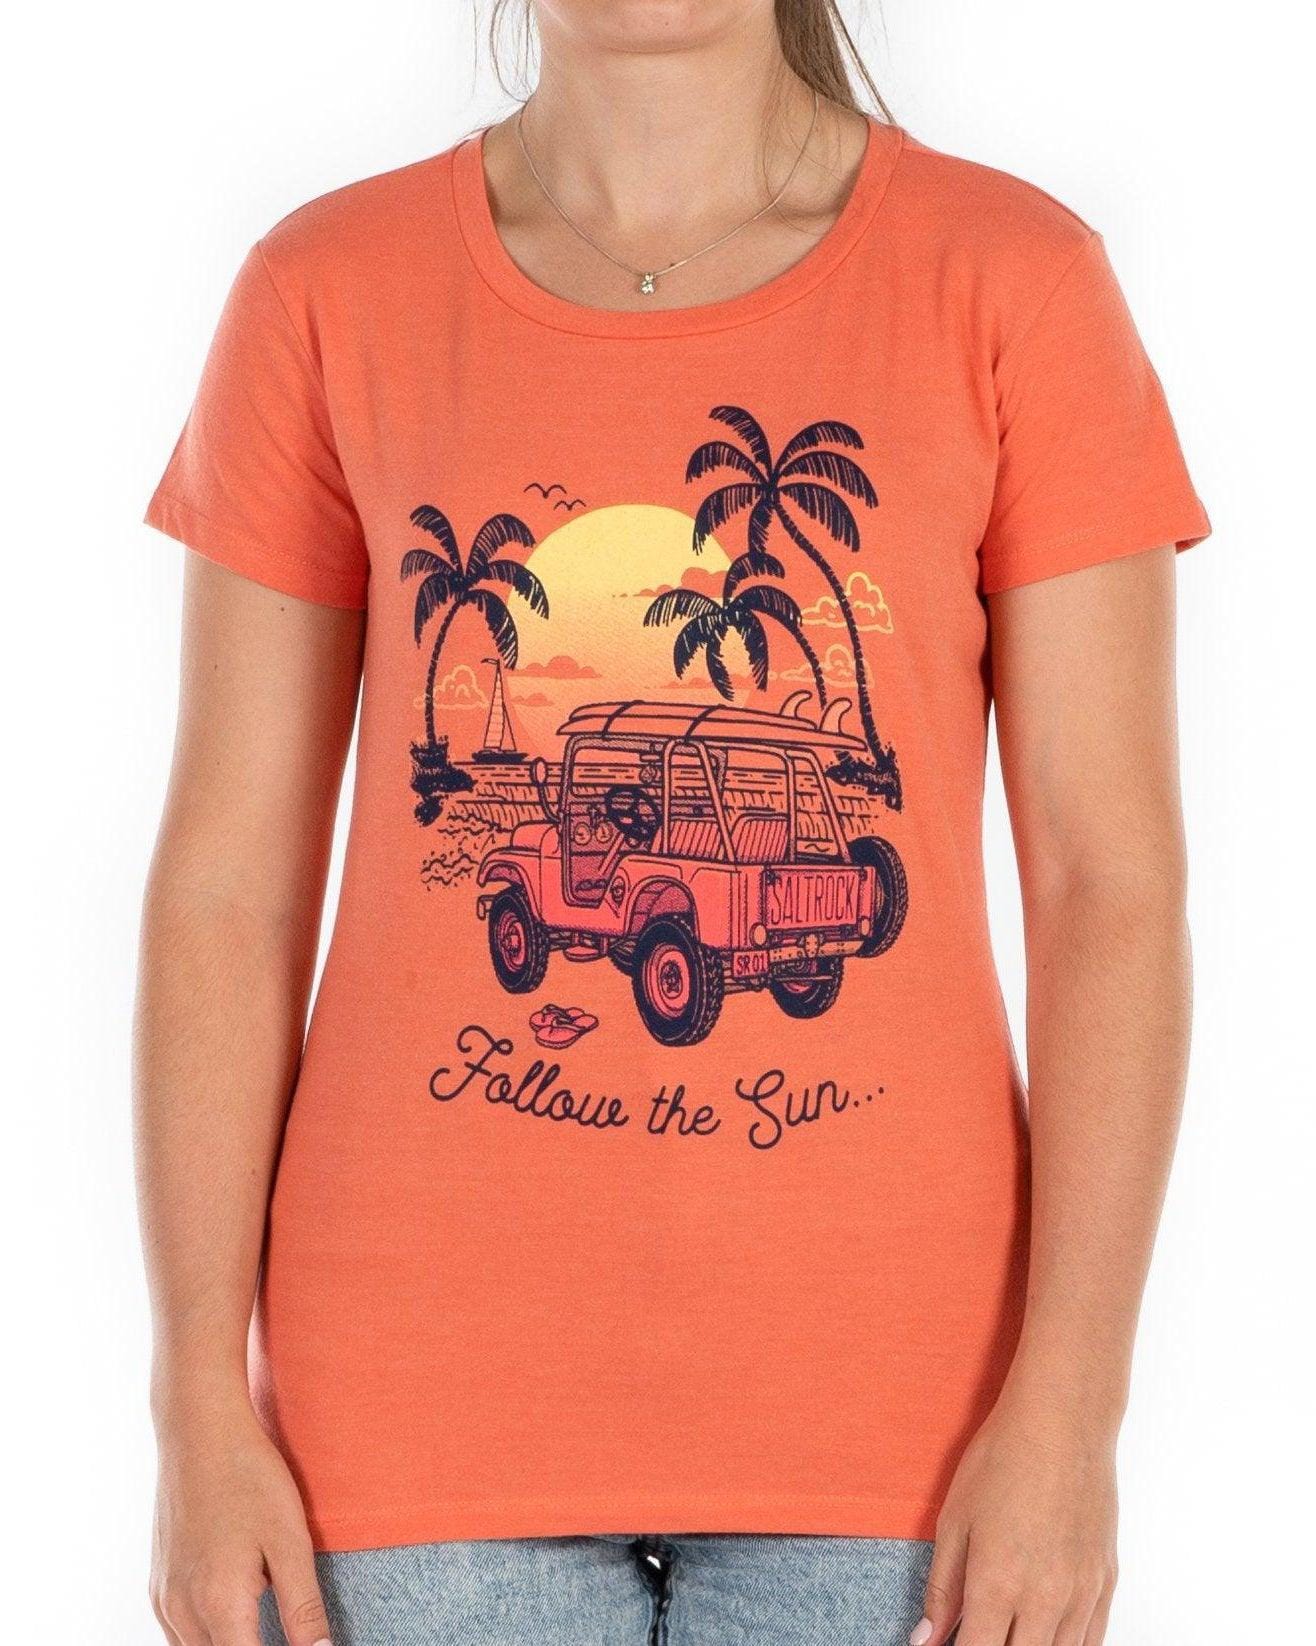 Follow The Sun - Short Sleeve T-Shirt - Coral